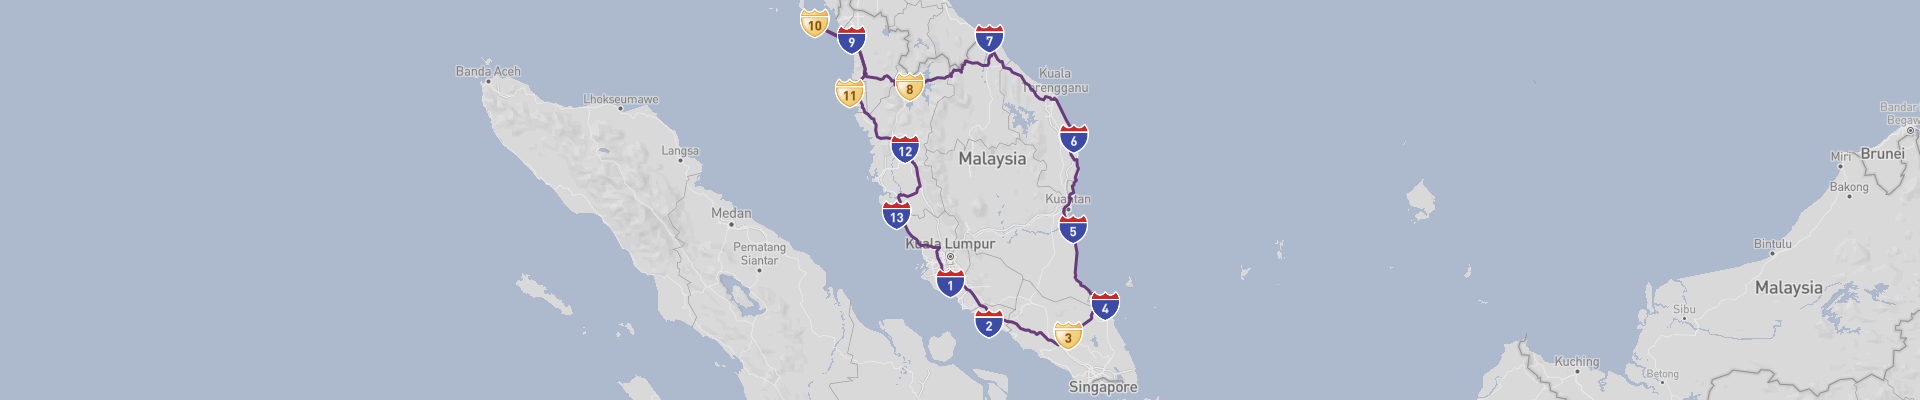 Itinéraire Malaysia 